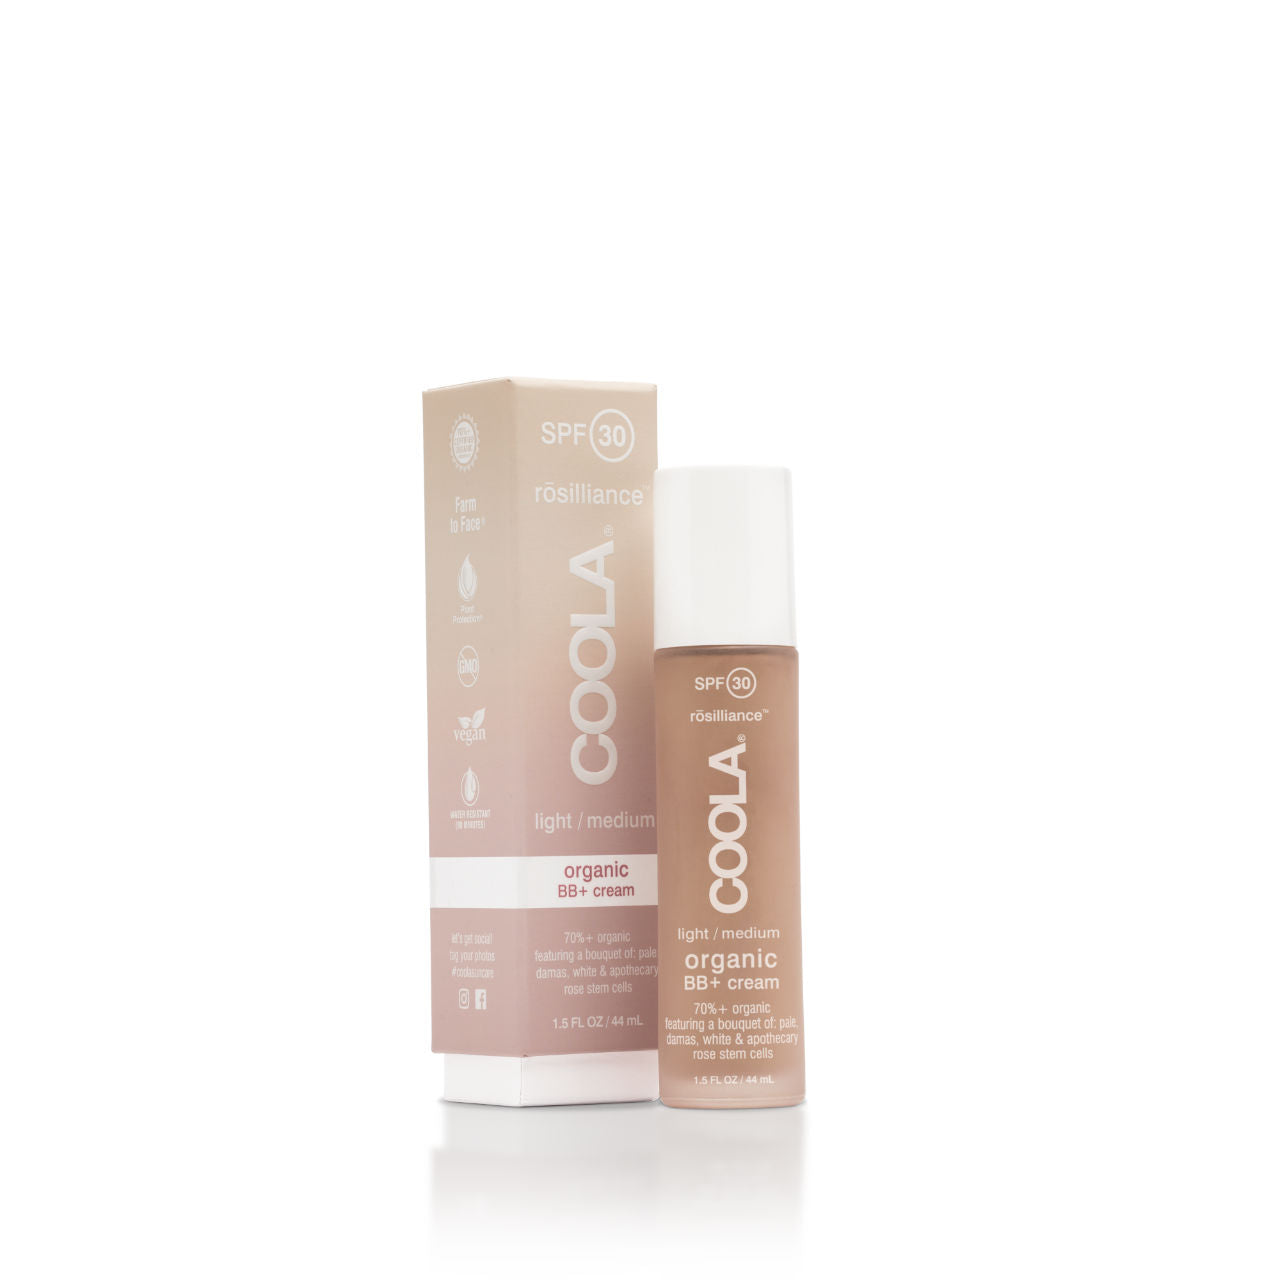 COOLA Mineral Face SPF 30 Rōsilliance™ Organic BB+ Cream - Light/Medium